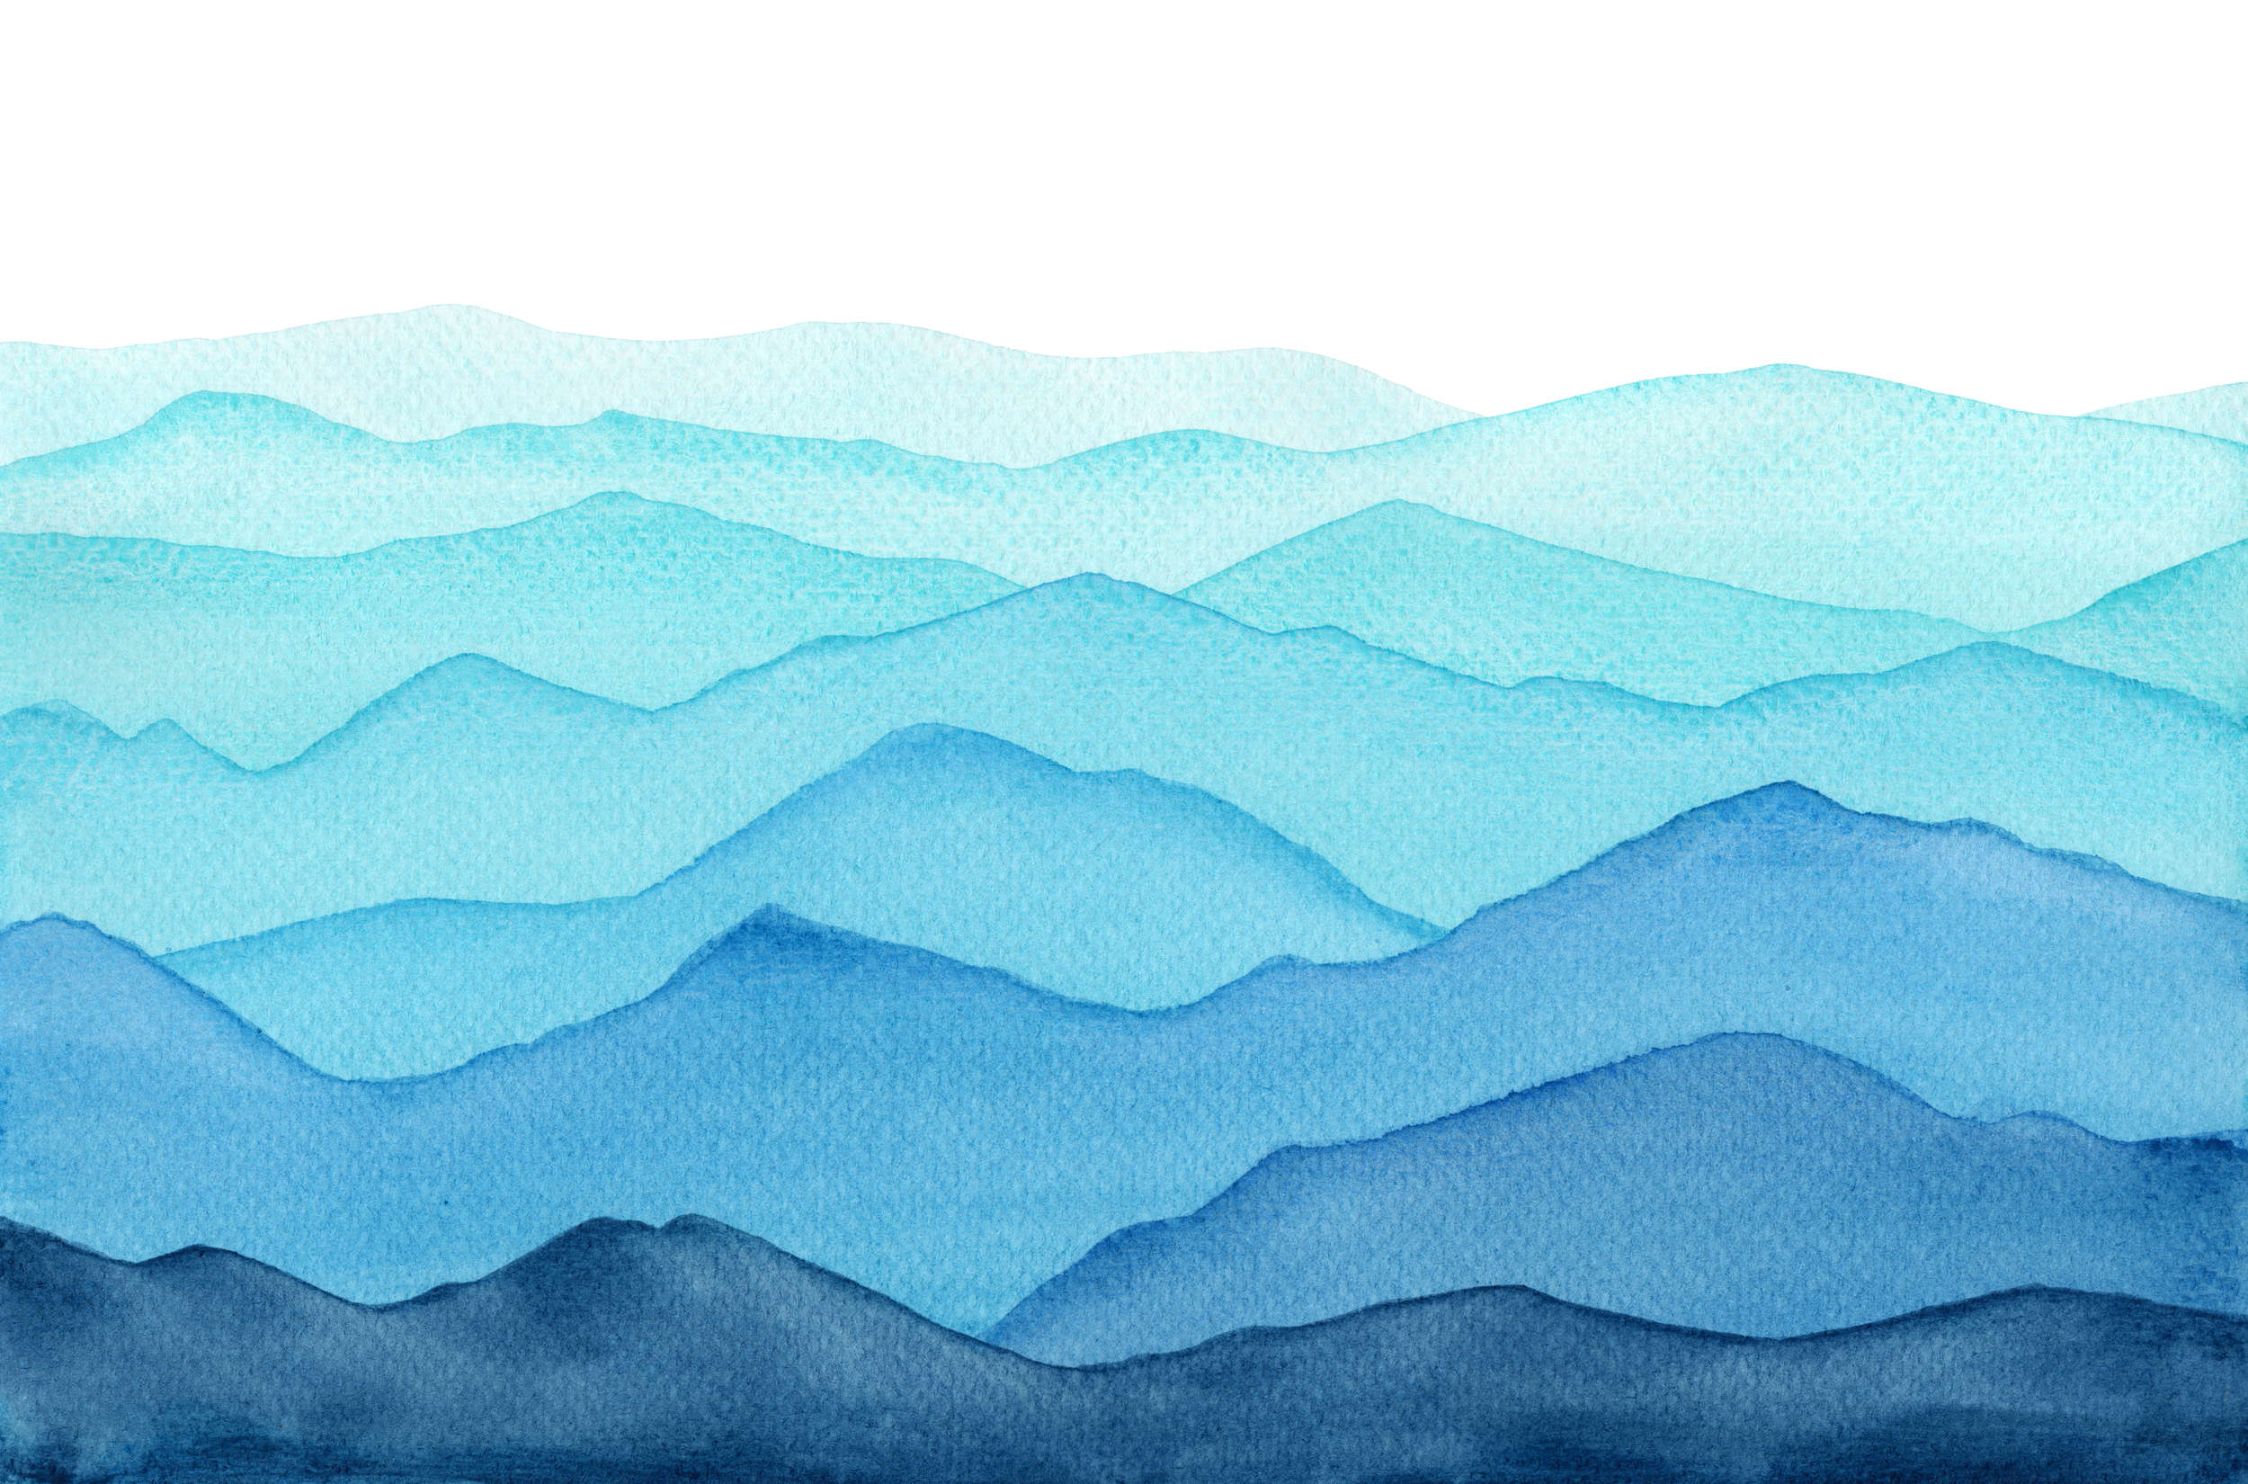             Sea with Waves in Watercolour Wallpaper - Smooth & Matt Non-woven
        